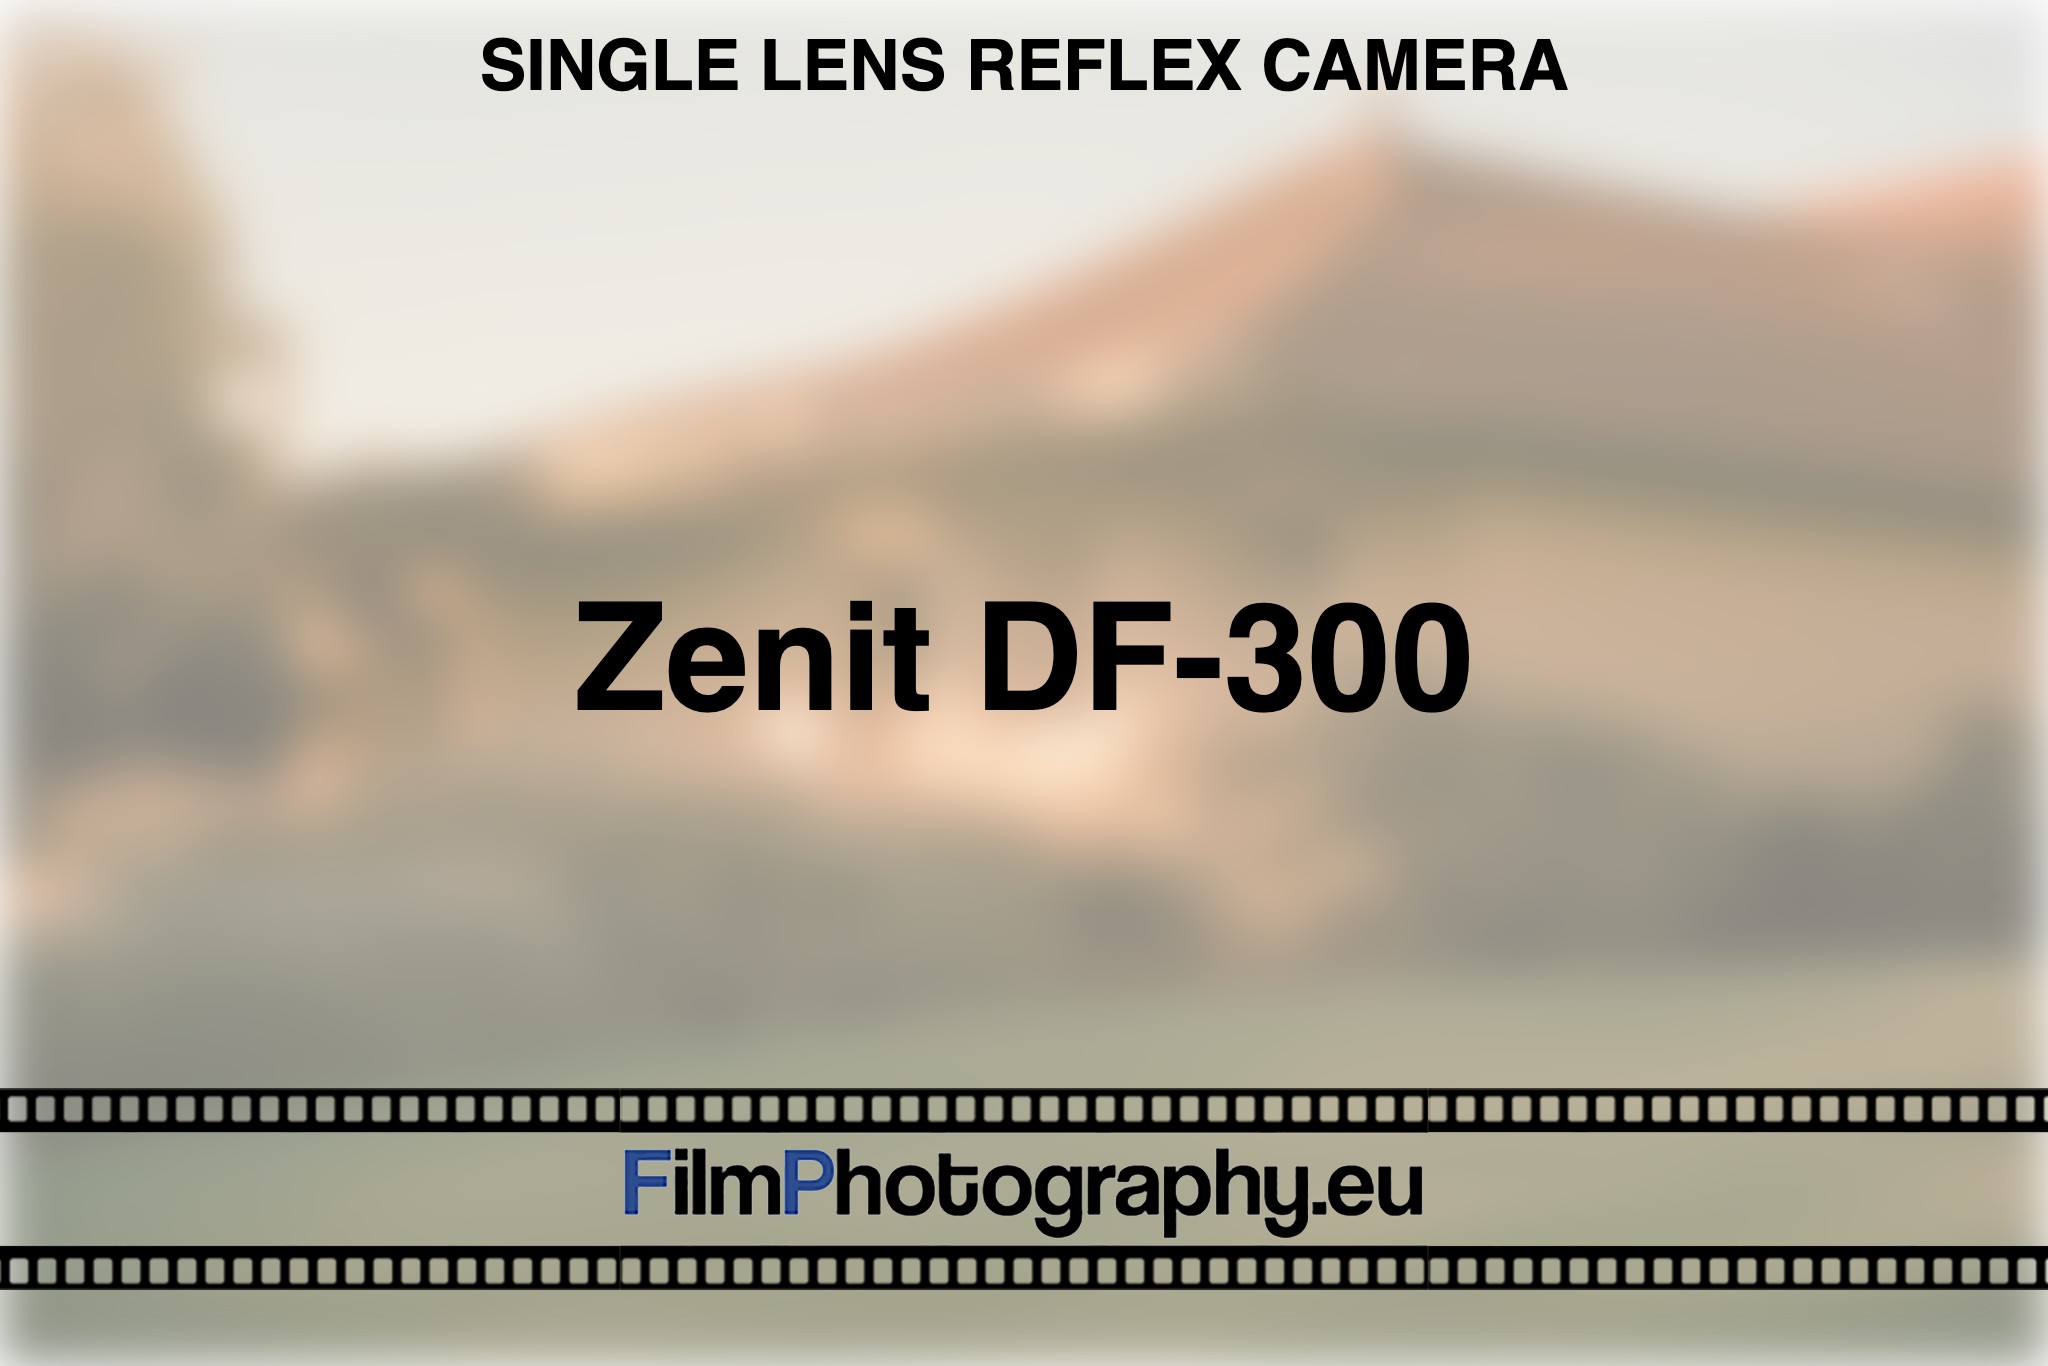 zenit-df-300-single-lens-reflex-camera-bnv